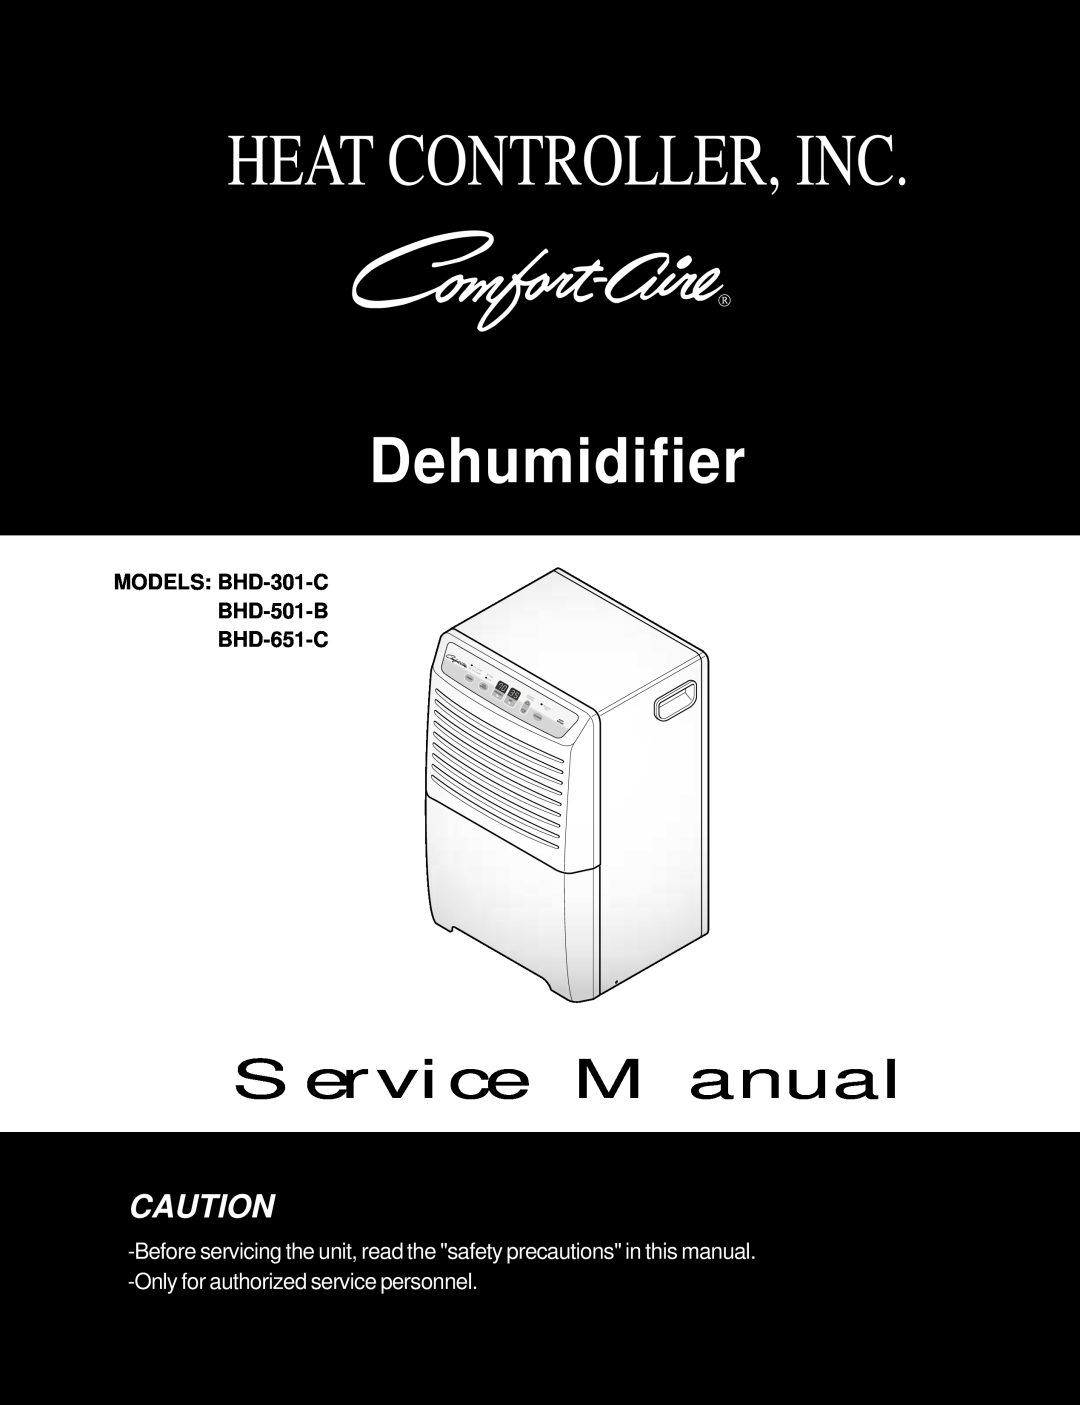 Heat Controller service manual MODELS BHD-301-C BHD-501-B BHD-651-C, Heat Controller, Inc, Dehumidifier 